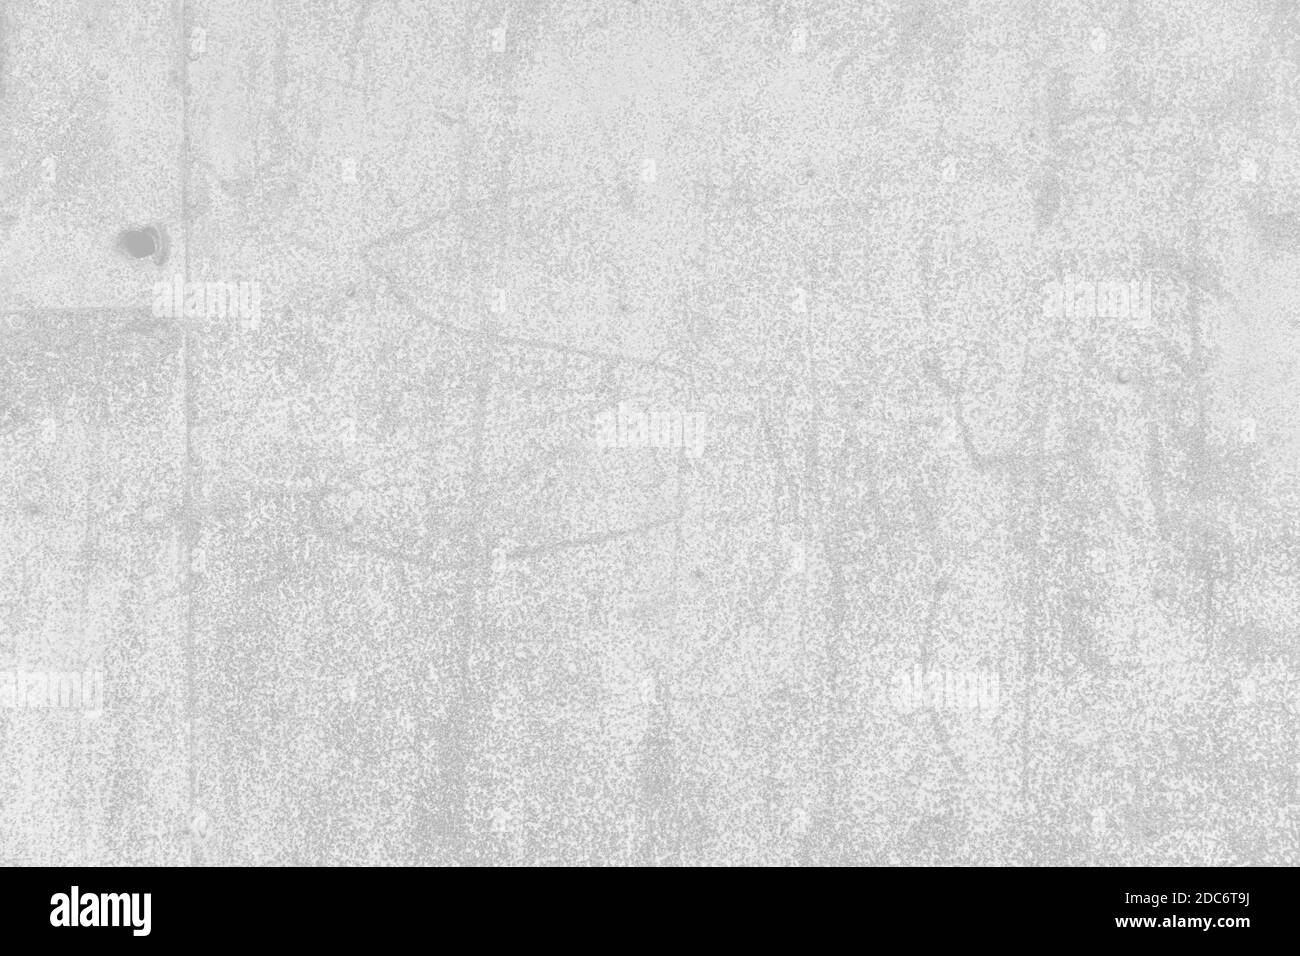 Rustic metal sheet wallpaper background Imágenes de stock en blanco y negro  - Alamy